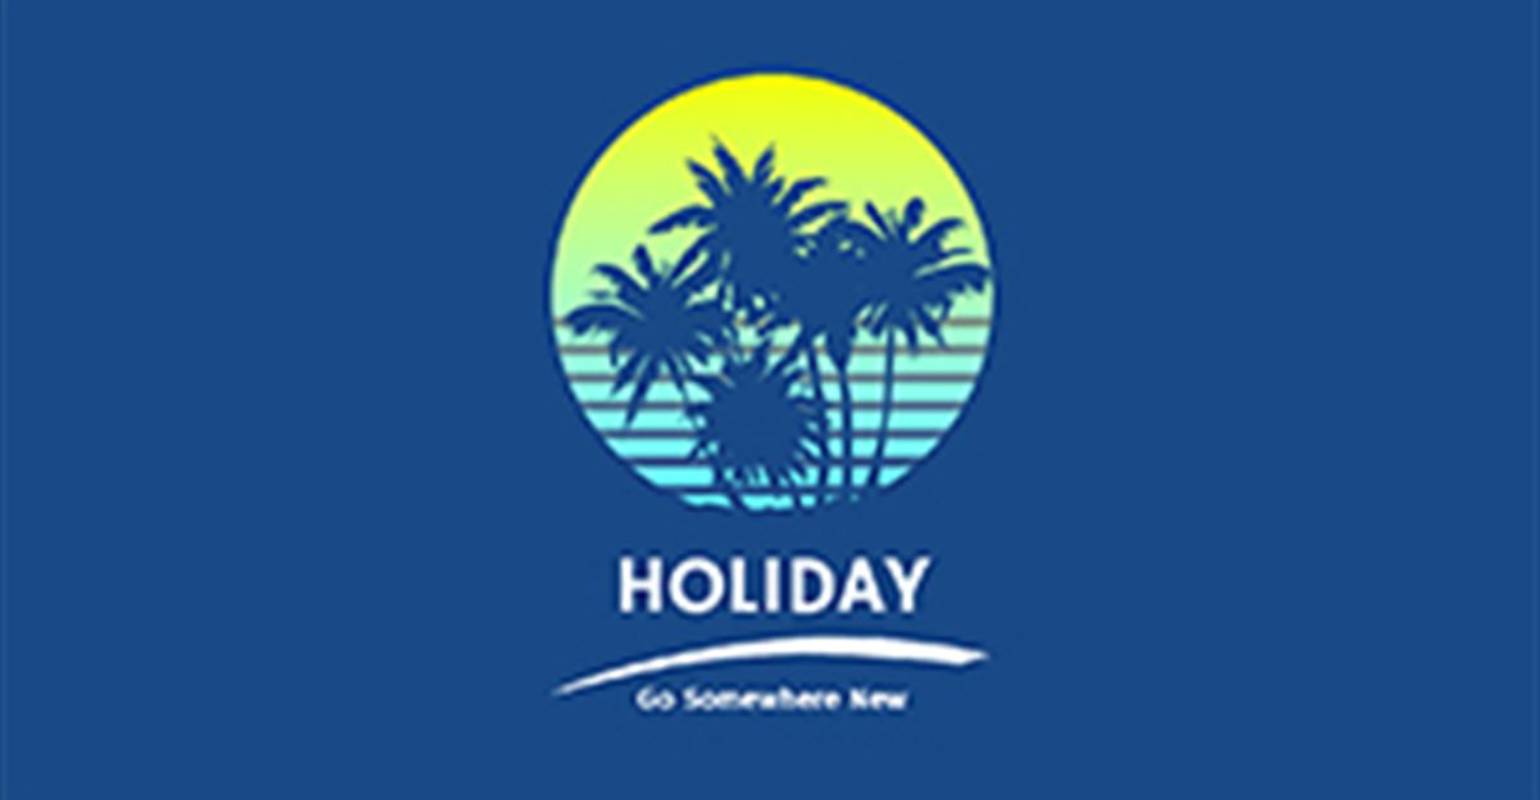 A small blurry travel agency logo